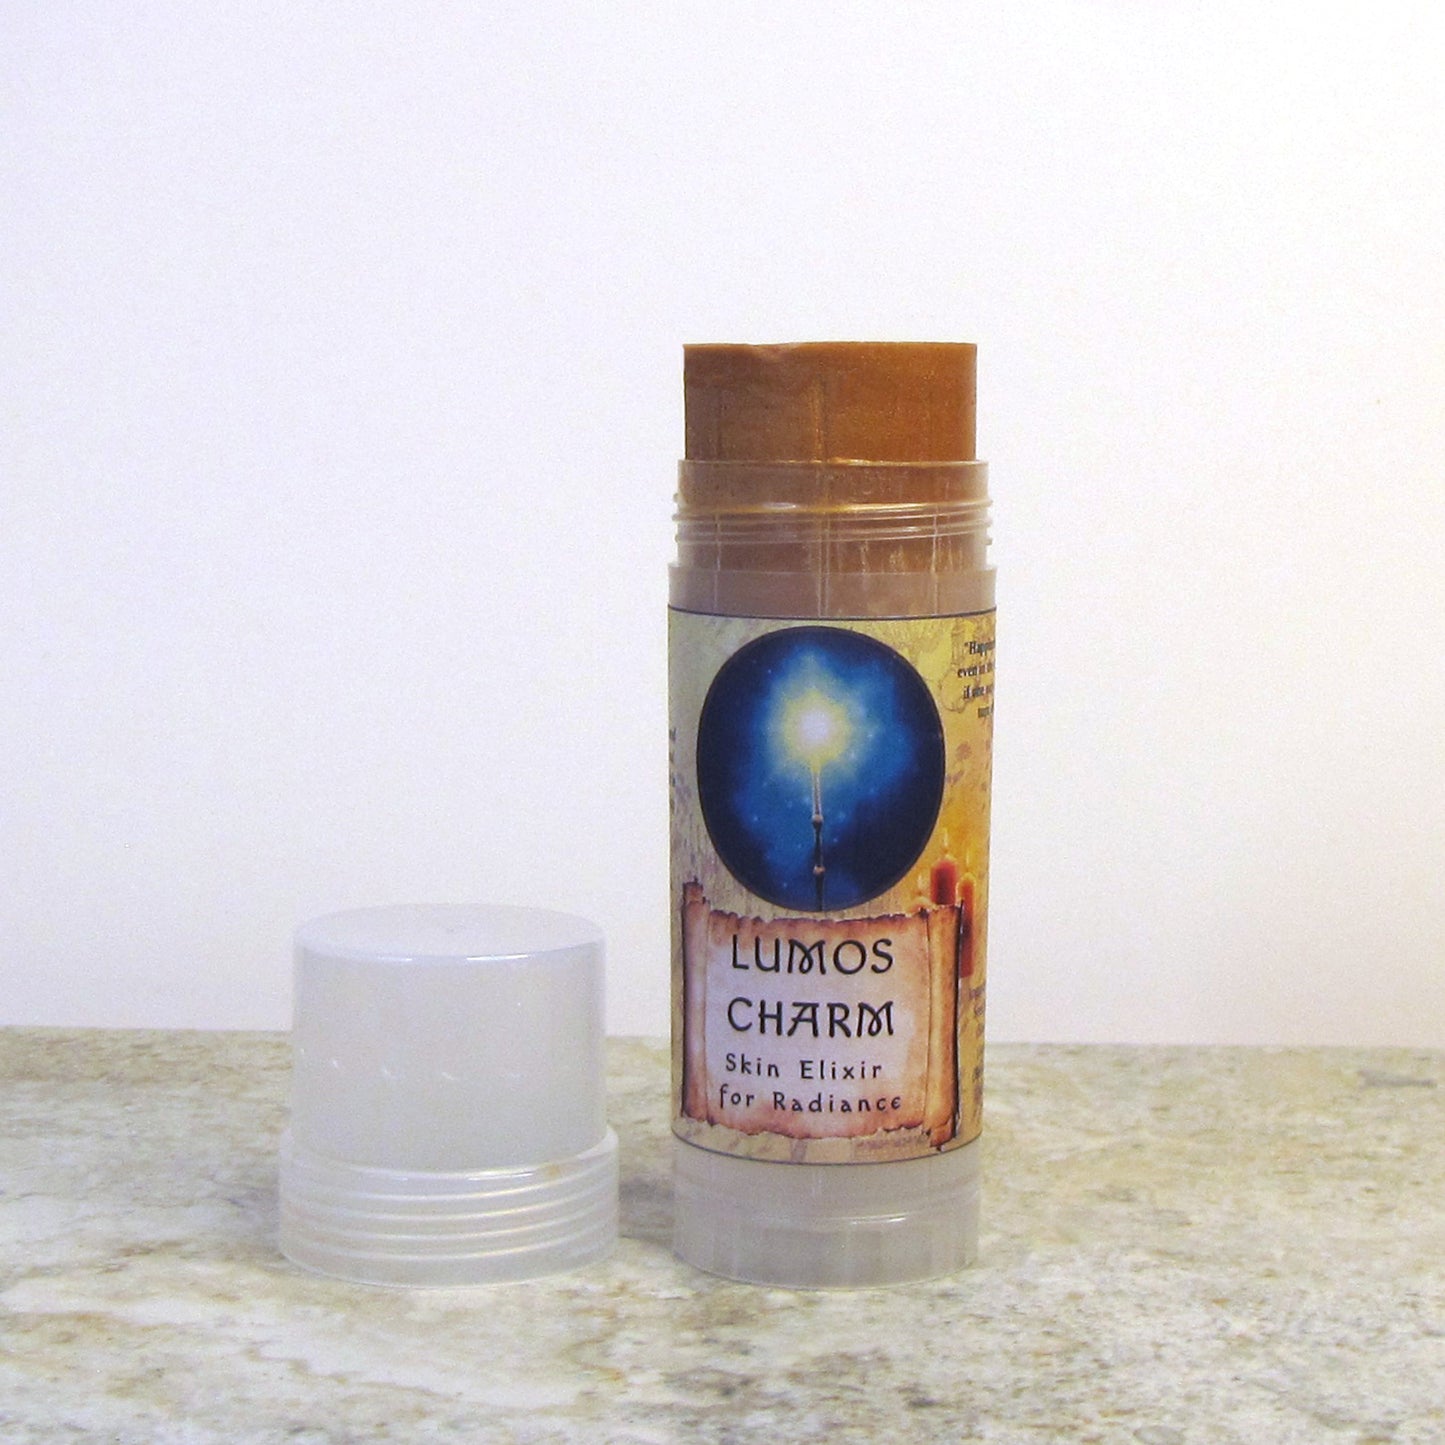 Lumos Charm - Shimmery Body Balm